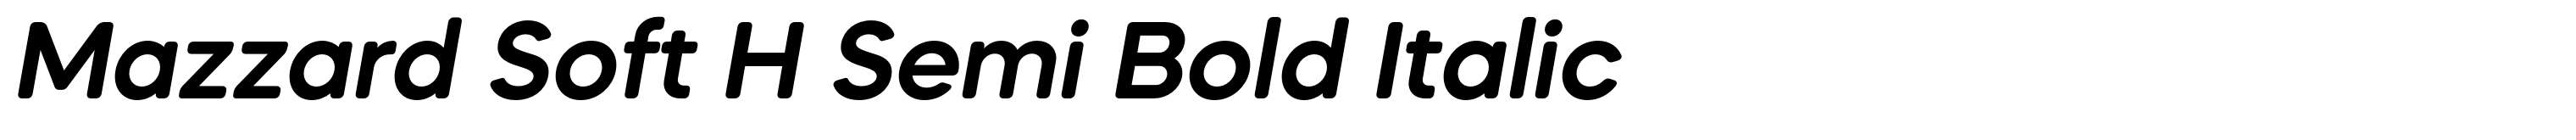 Mazzard Soft H Semi Bold Italic